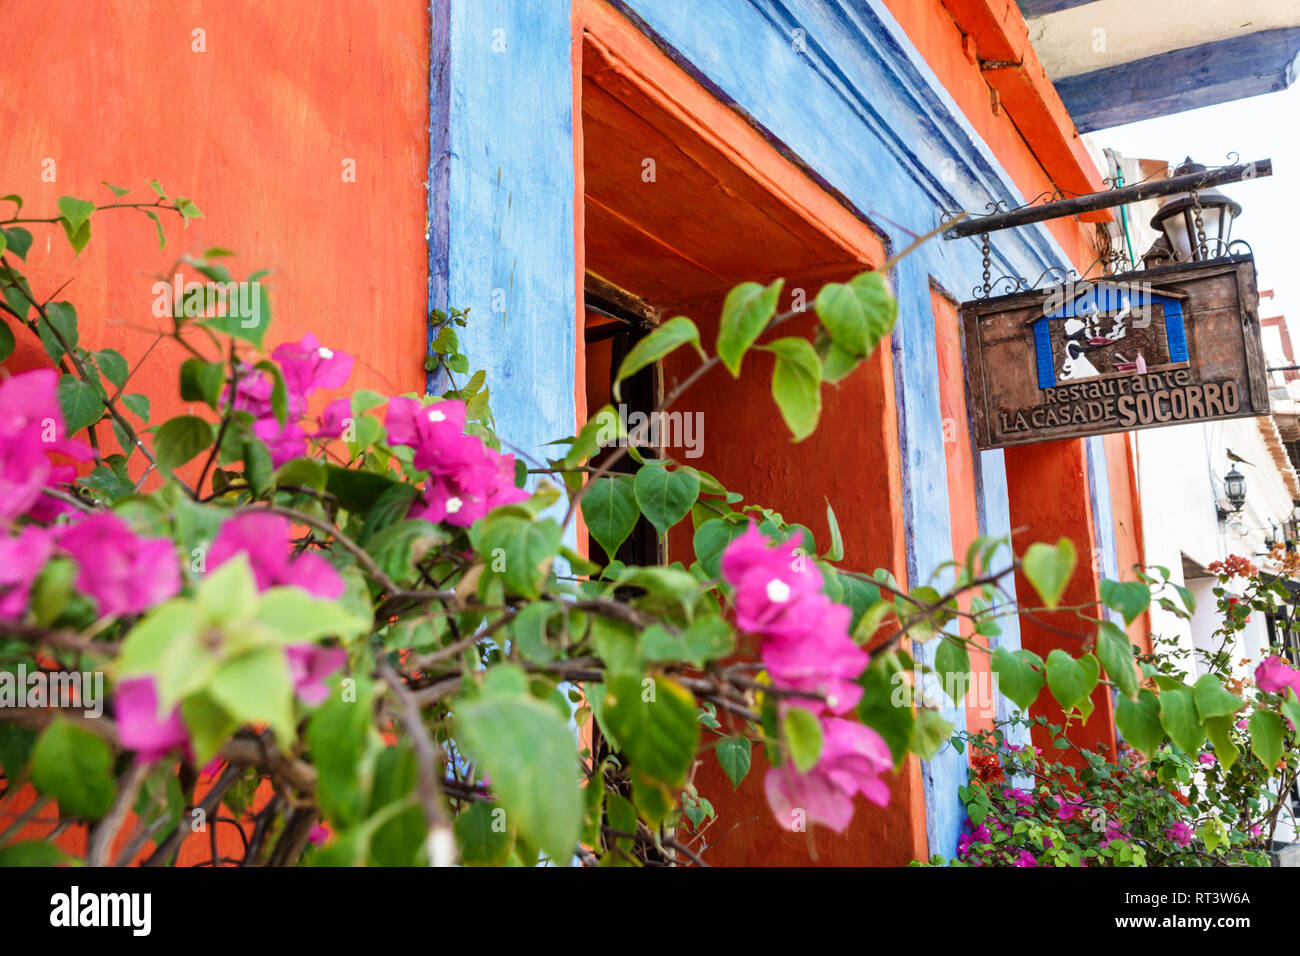 Cartagena Colombia,Center,centre,Getsemani,Restaurante La Casa de Socorro,restaurant restaurants food dining cafe cafes,sign,entrance,colorful walls,b Stock Photo